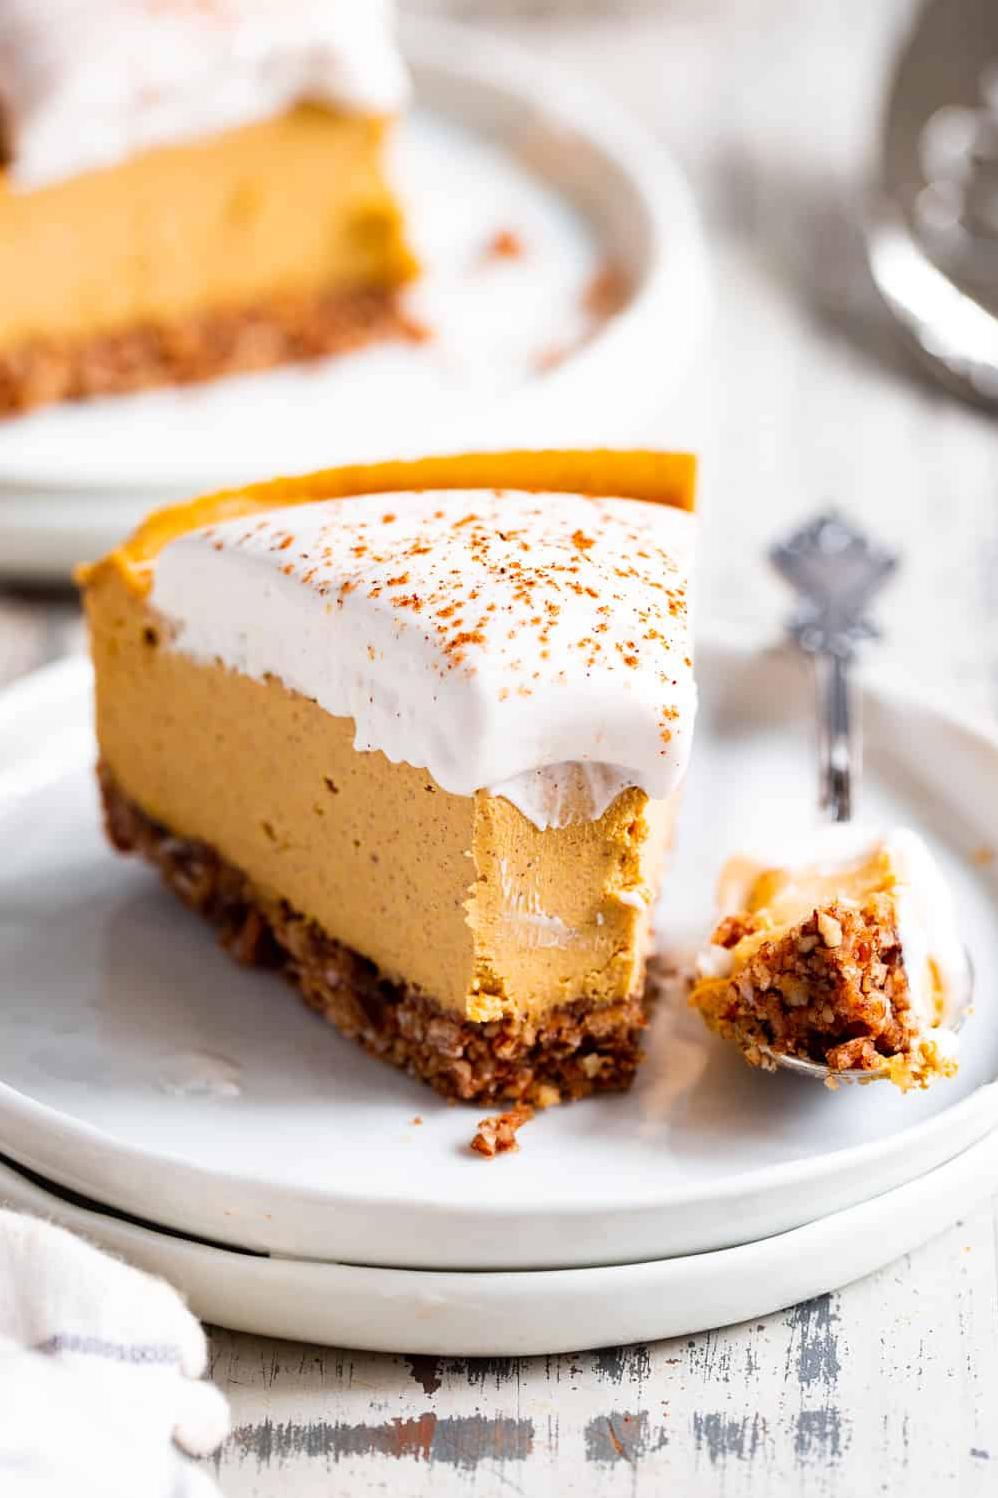  Dig into this dreamy vegan pumpkin cheesecake!